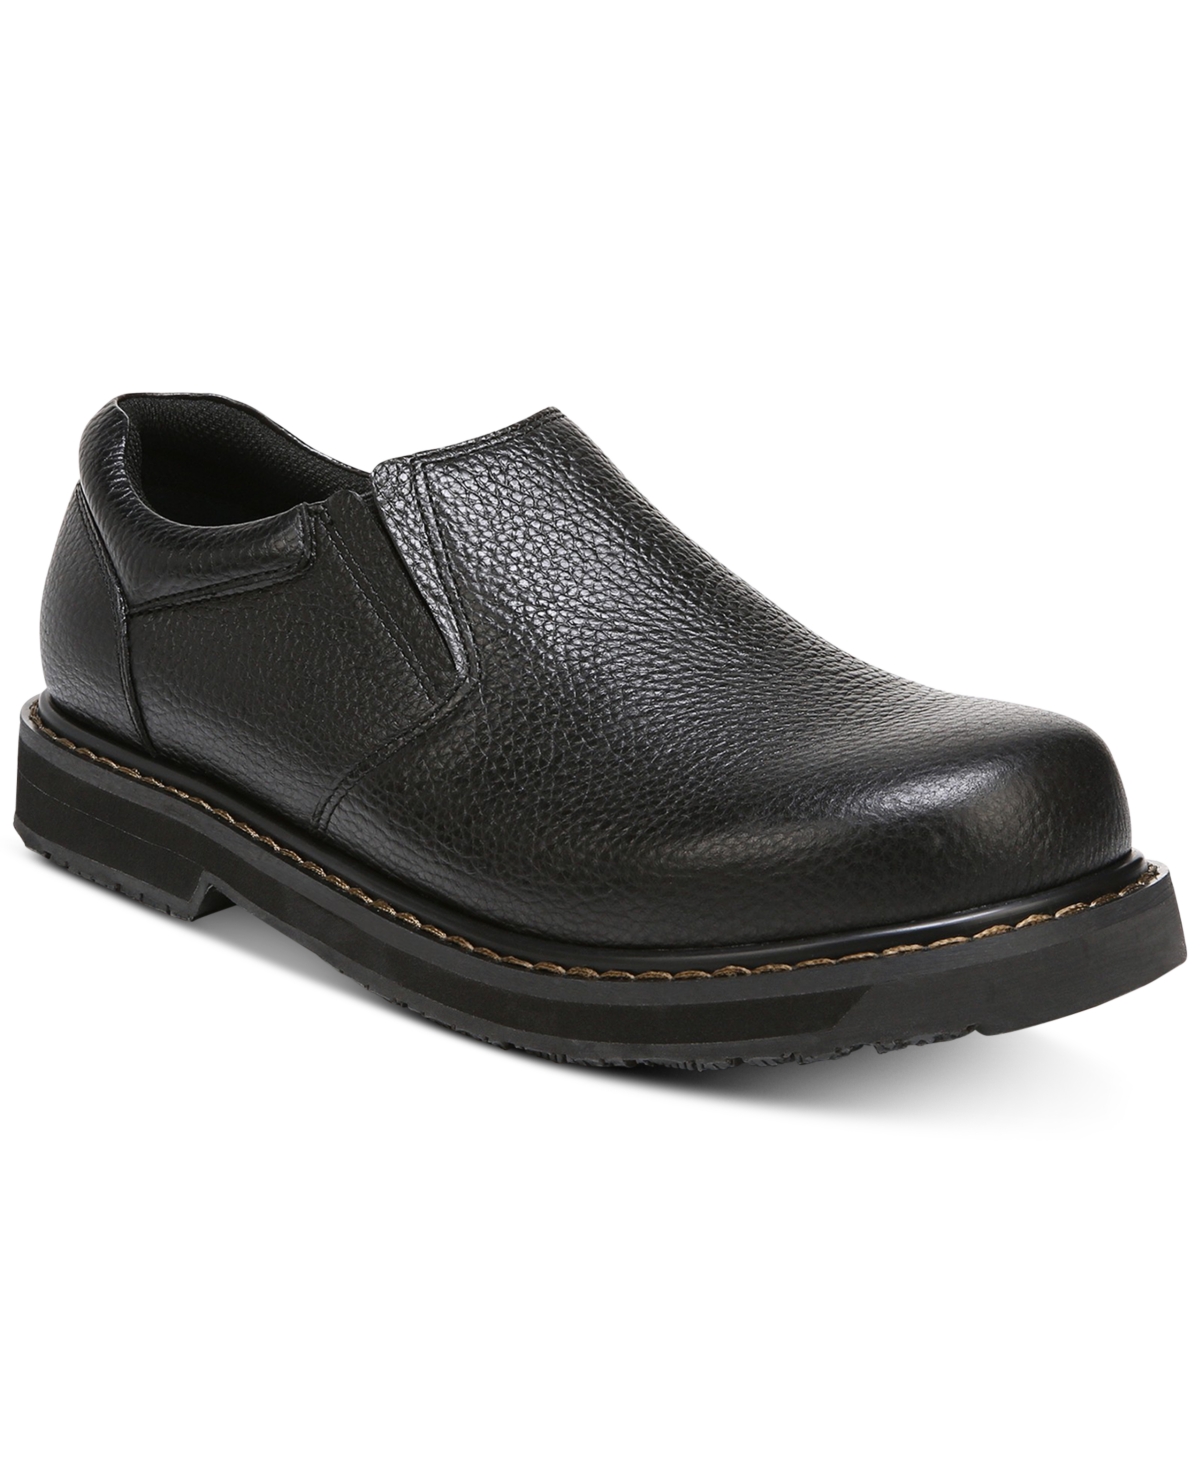 Men's Winder Ii Oil & Slip Resistant Slip-On Loafers - Black